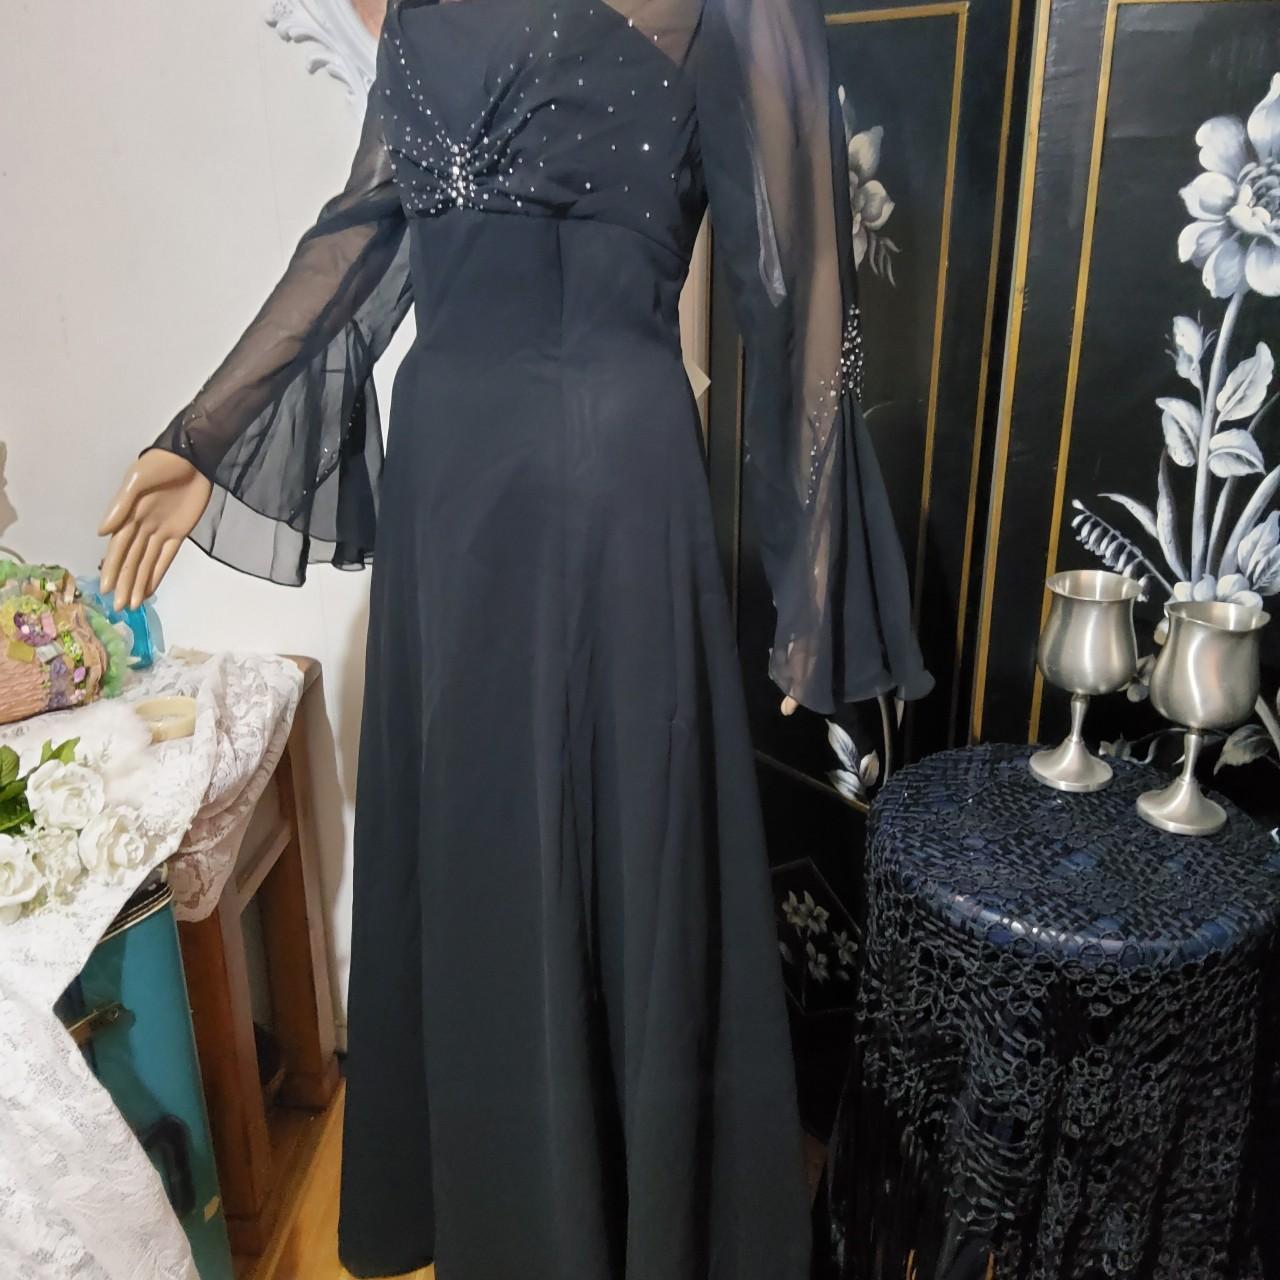 BLACK ROMANTIC GOTH DRESS BEAUTIFUL FAIRY LIKE... - Depop